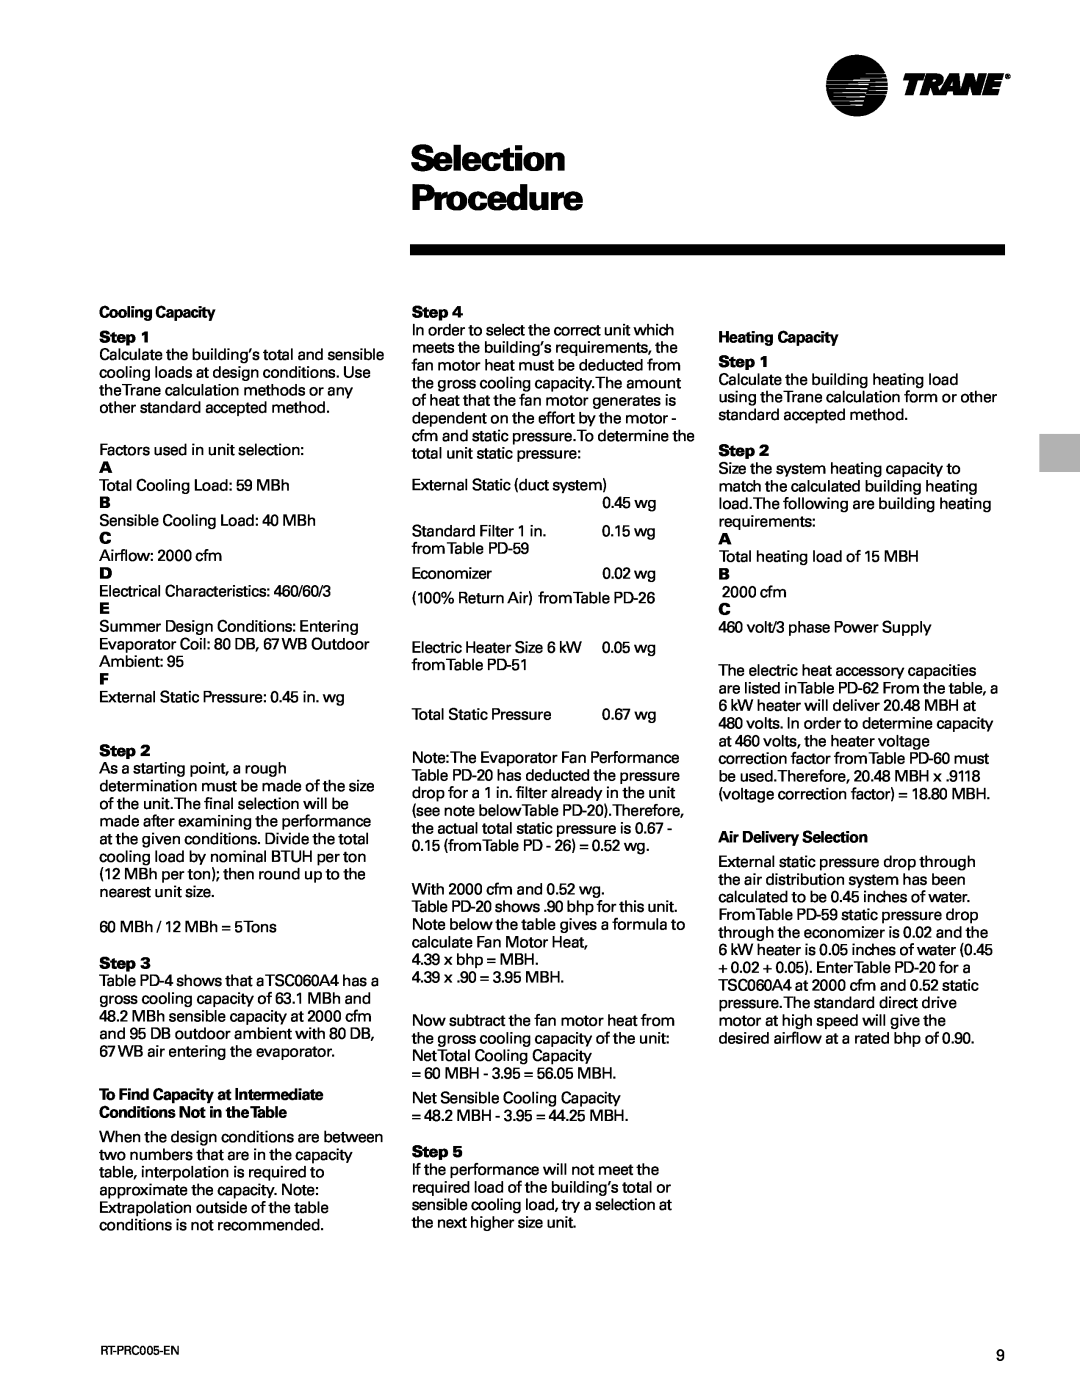 Trane RT-PRC005 manual Selection Procedure 